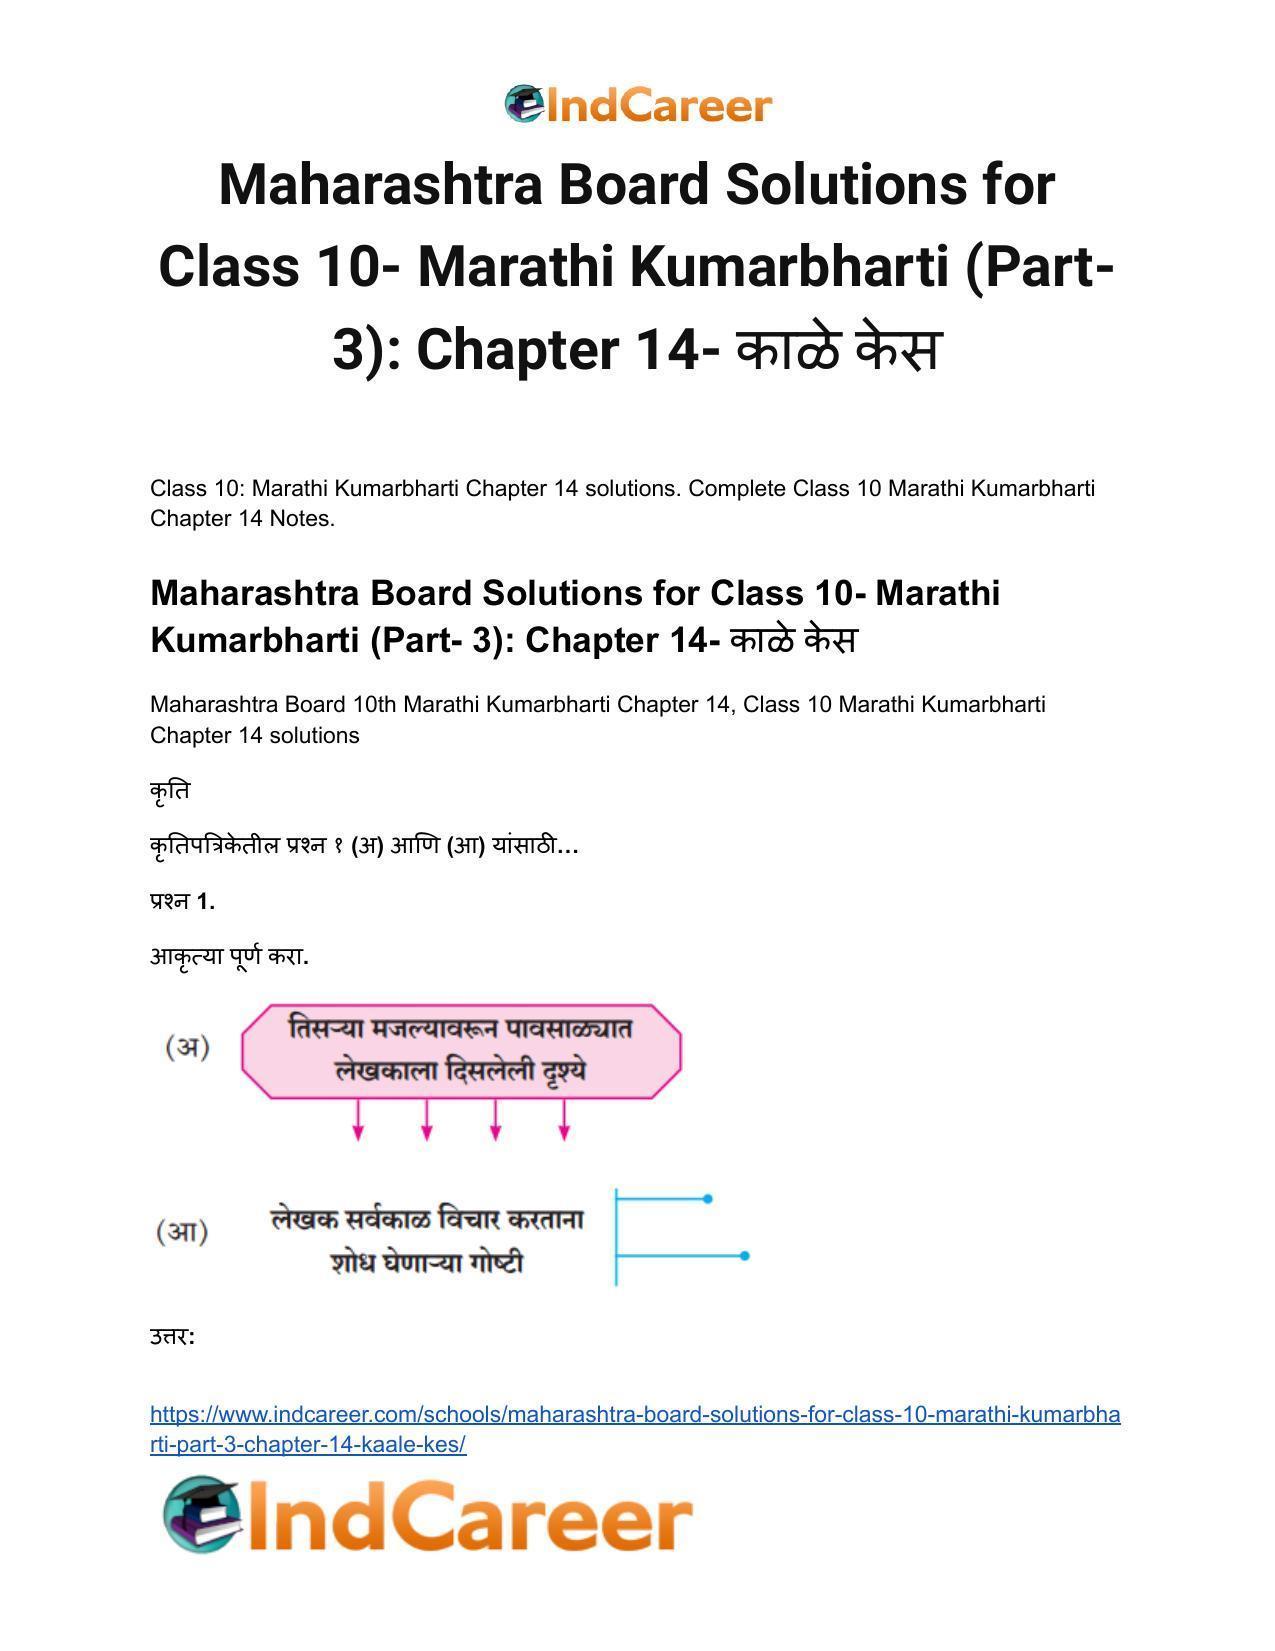 Maharashtra Board Solutions for Class 10- Marathi Kumarbharti (Part- 3): Chapter 14- काळे केस - Page 2